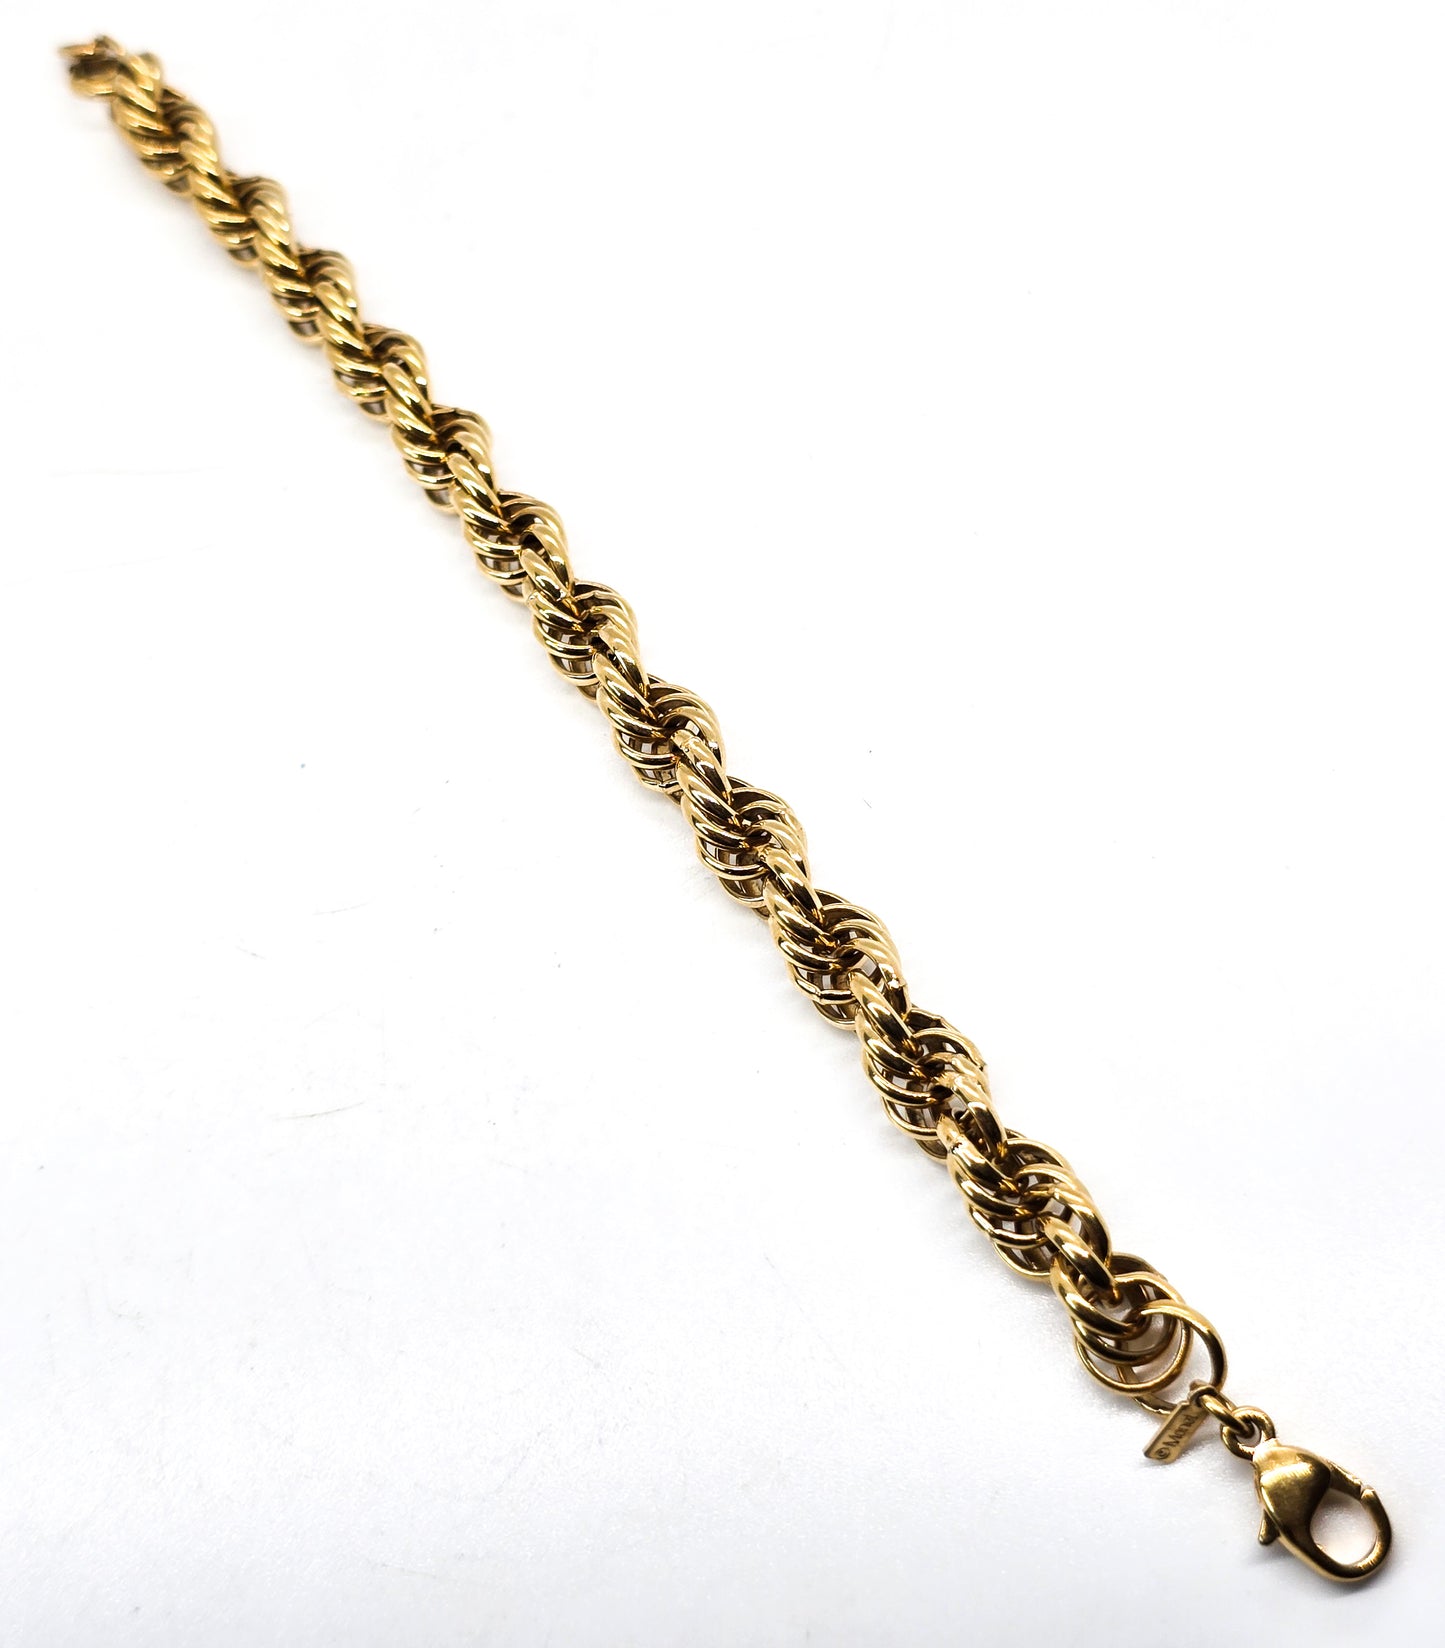 Monet gold toned vintage chain charm bracelet 7.75 inches